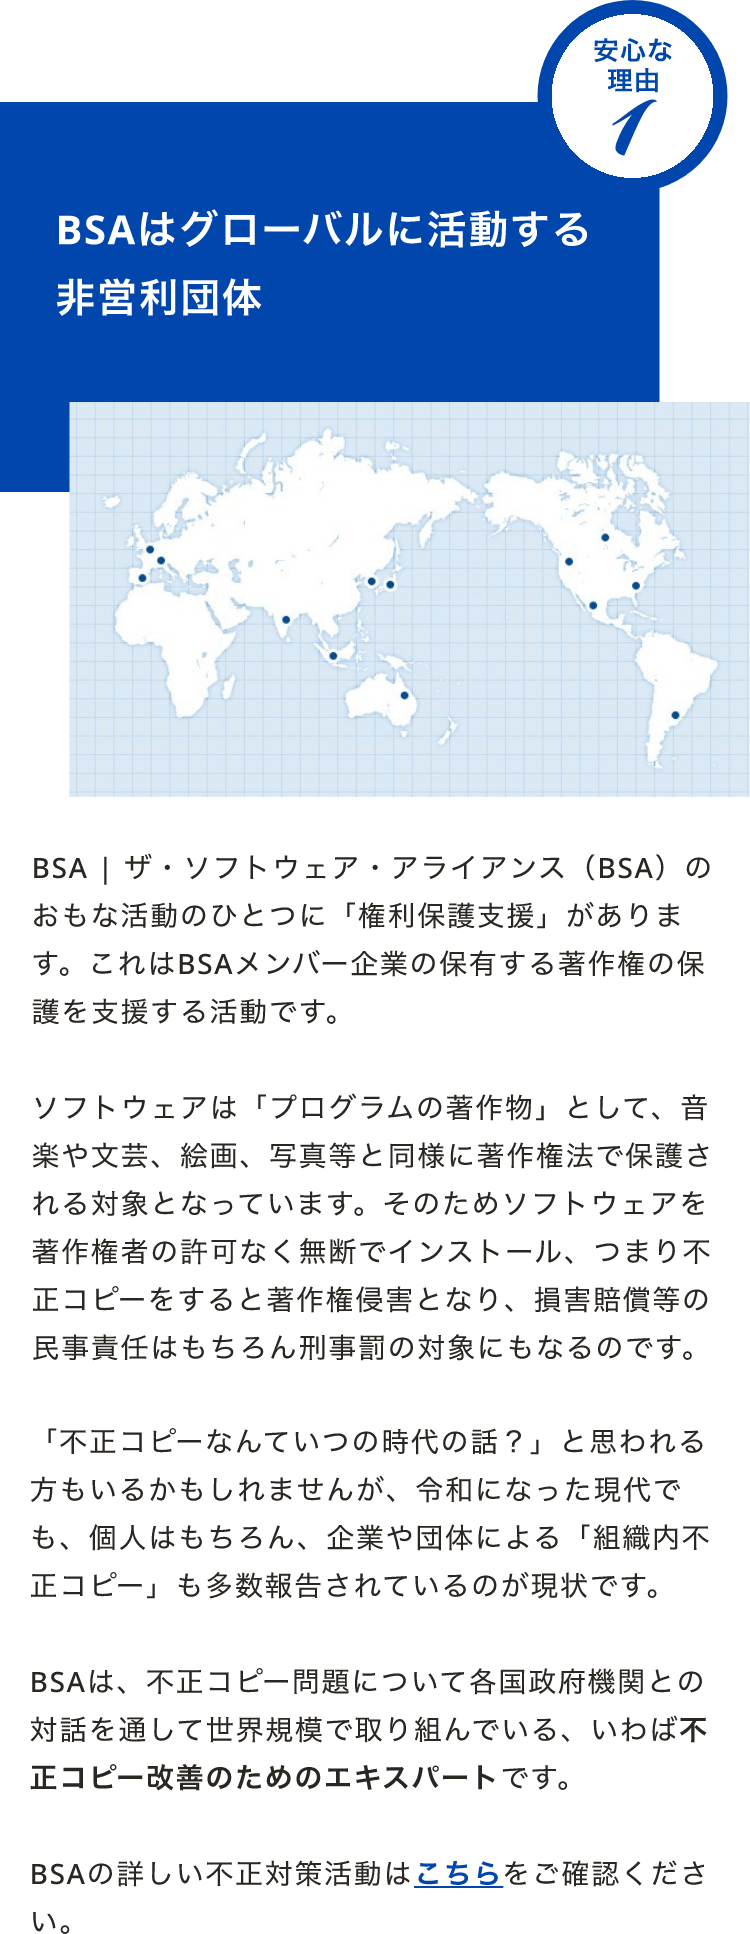 BSAはグローバルに活動する非営利団体